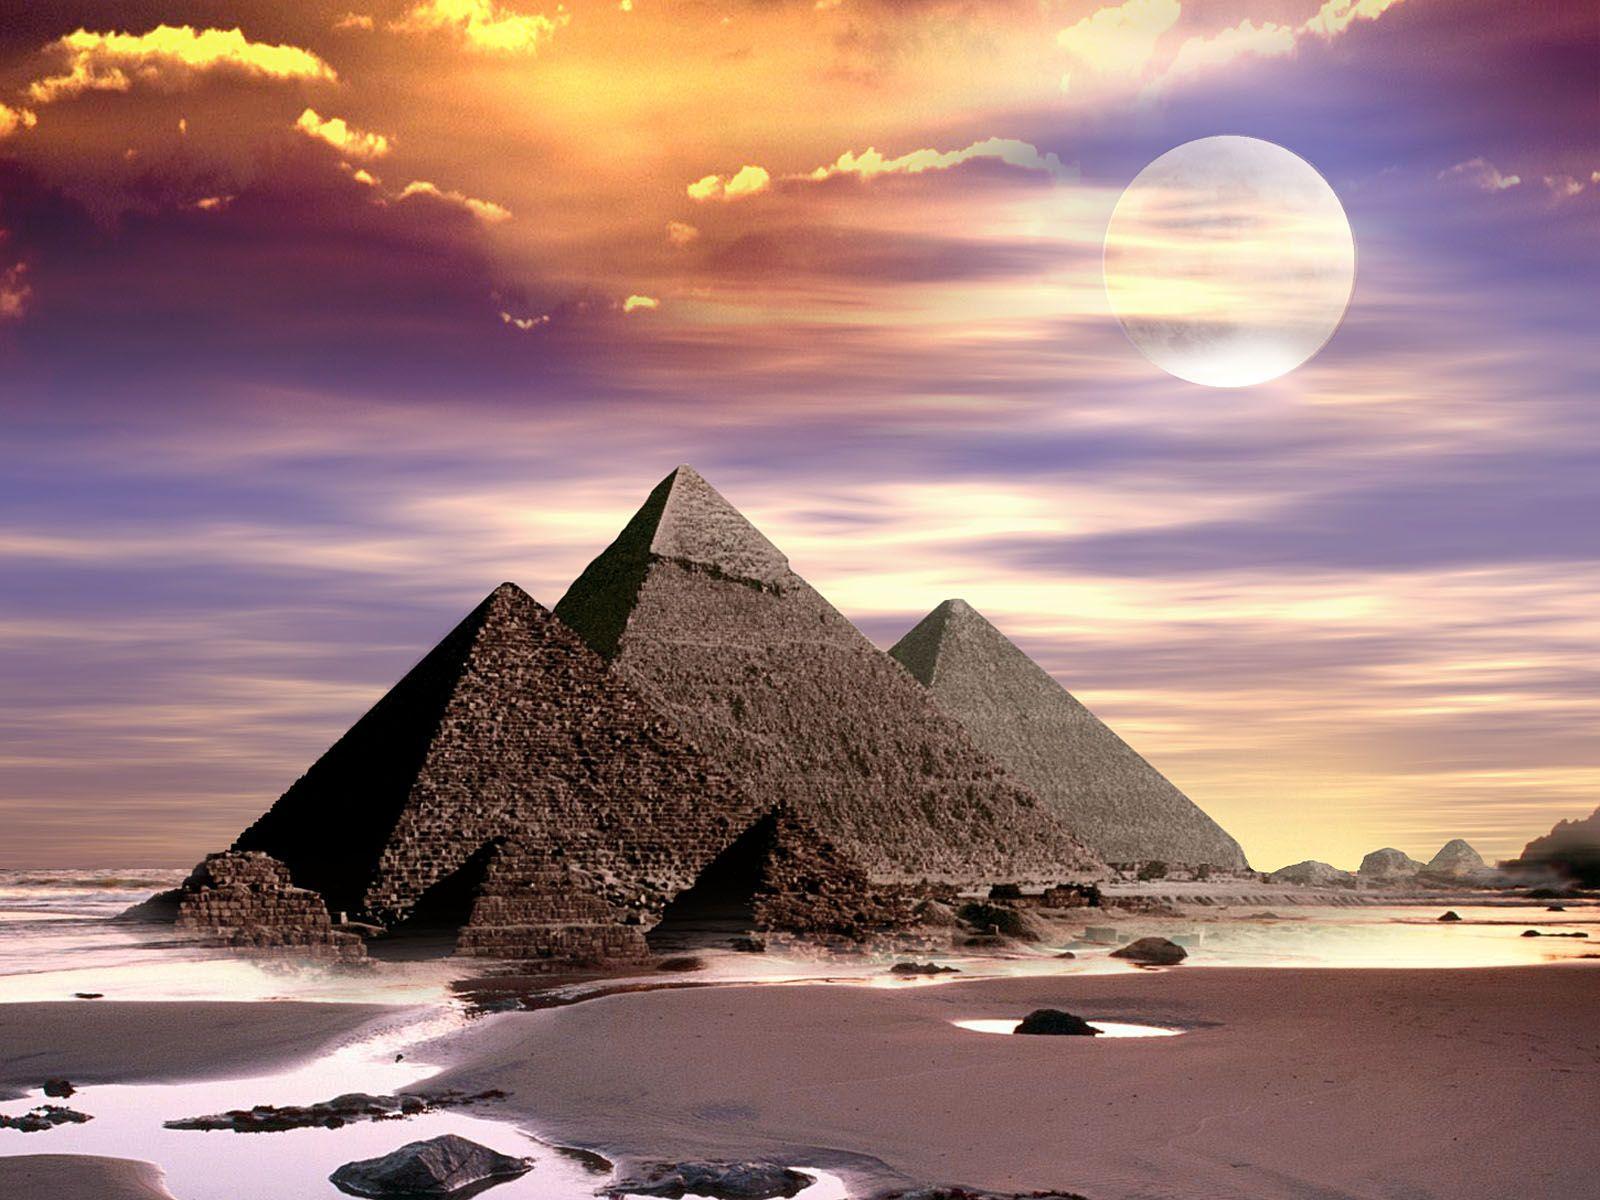 The Egypt Pyramids